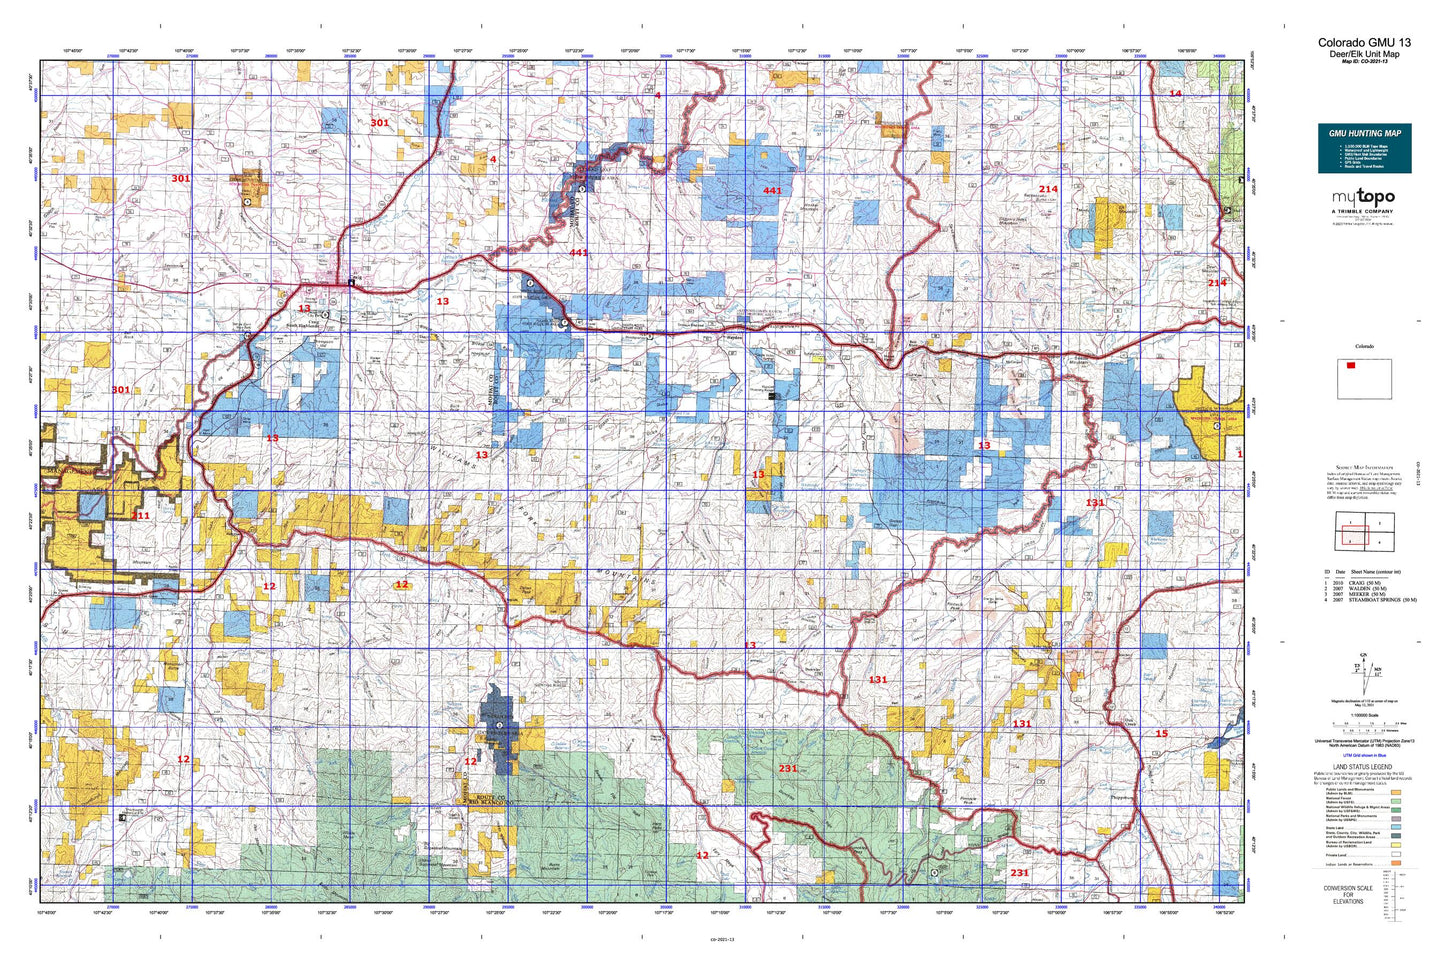 Colorado GMU 13 Map Image